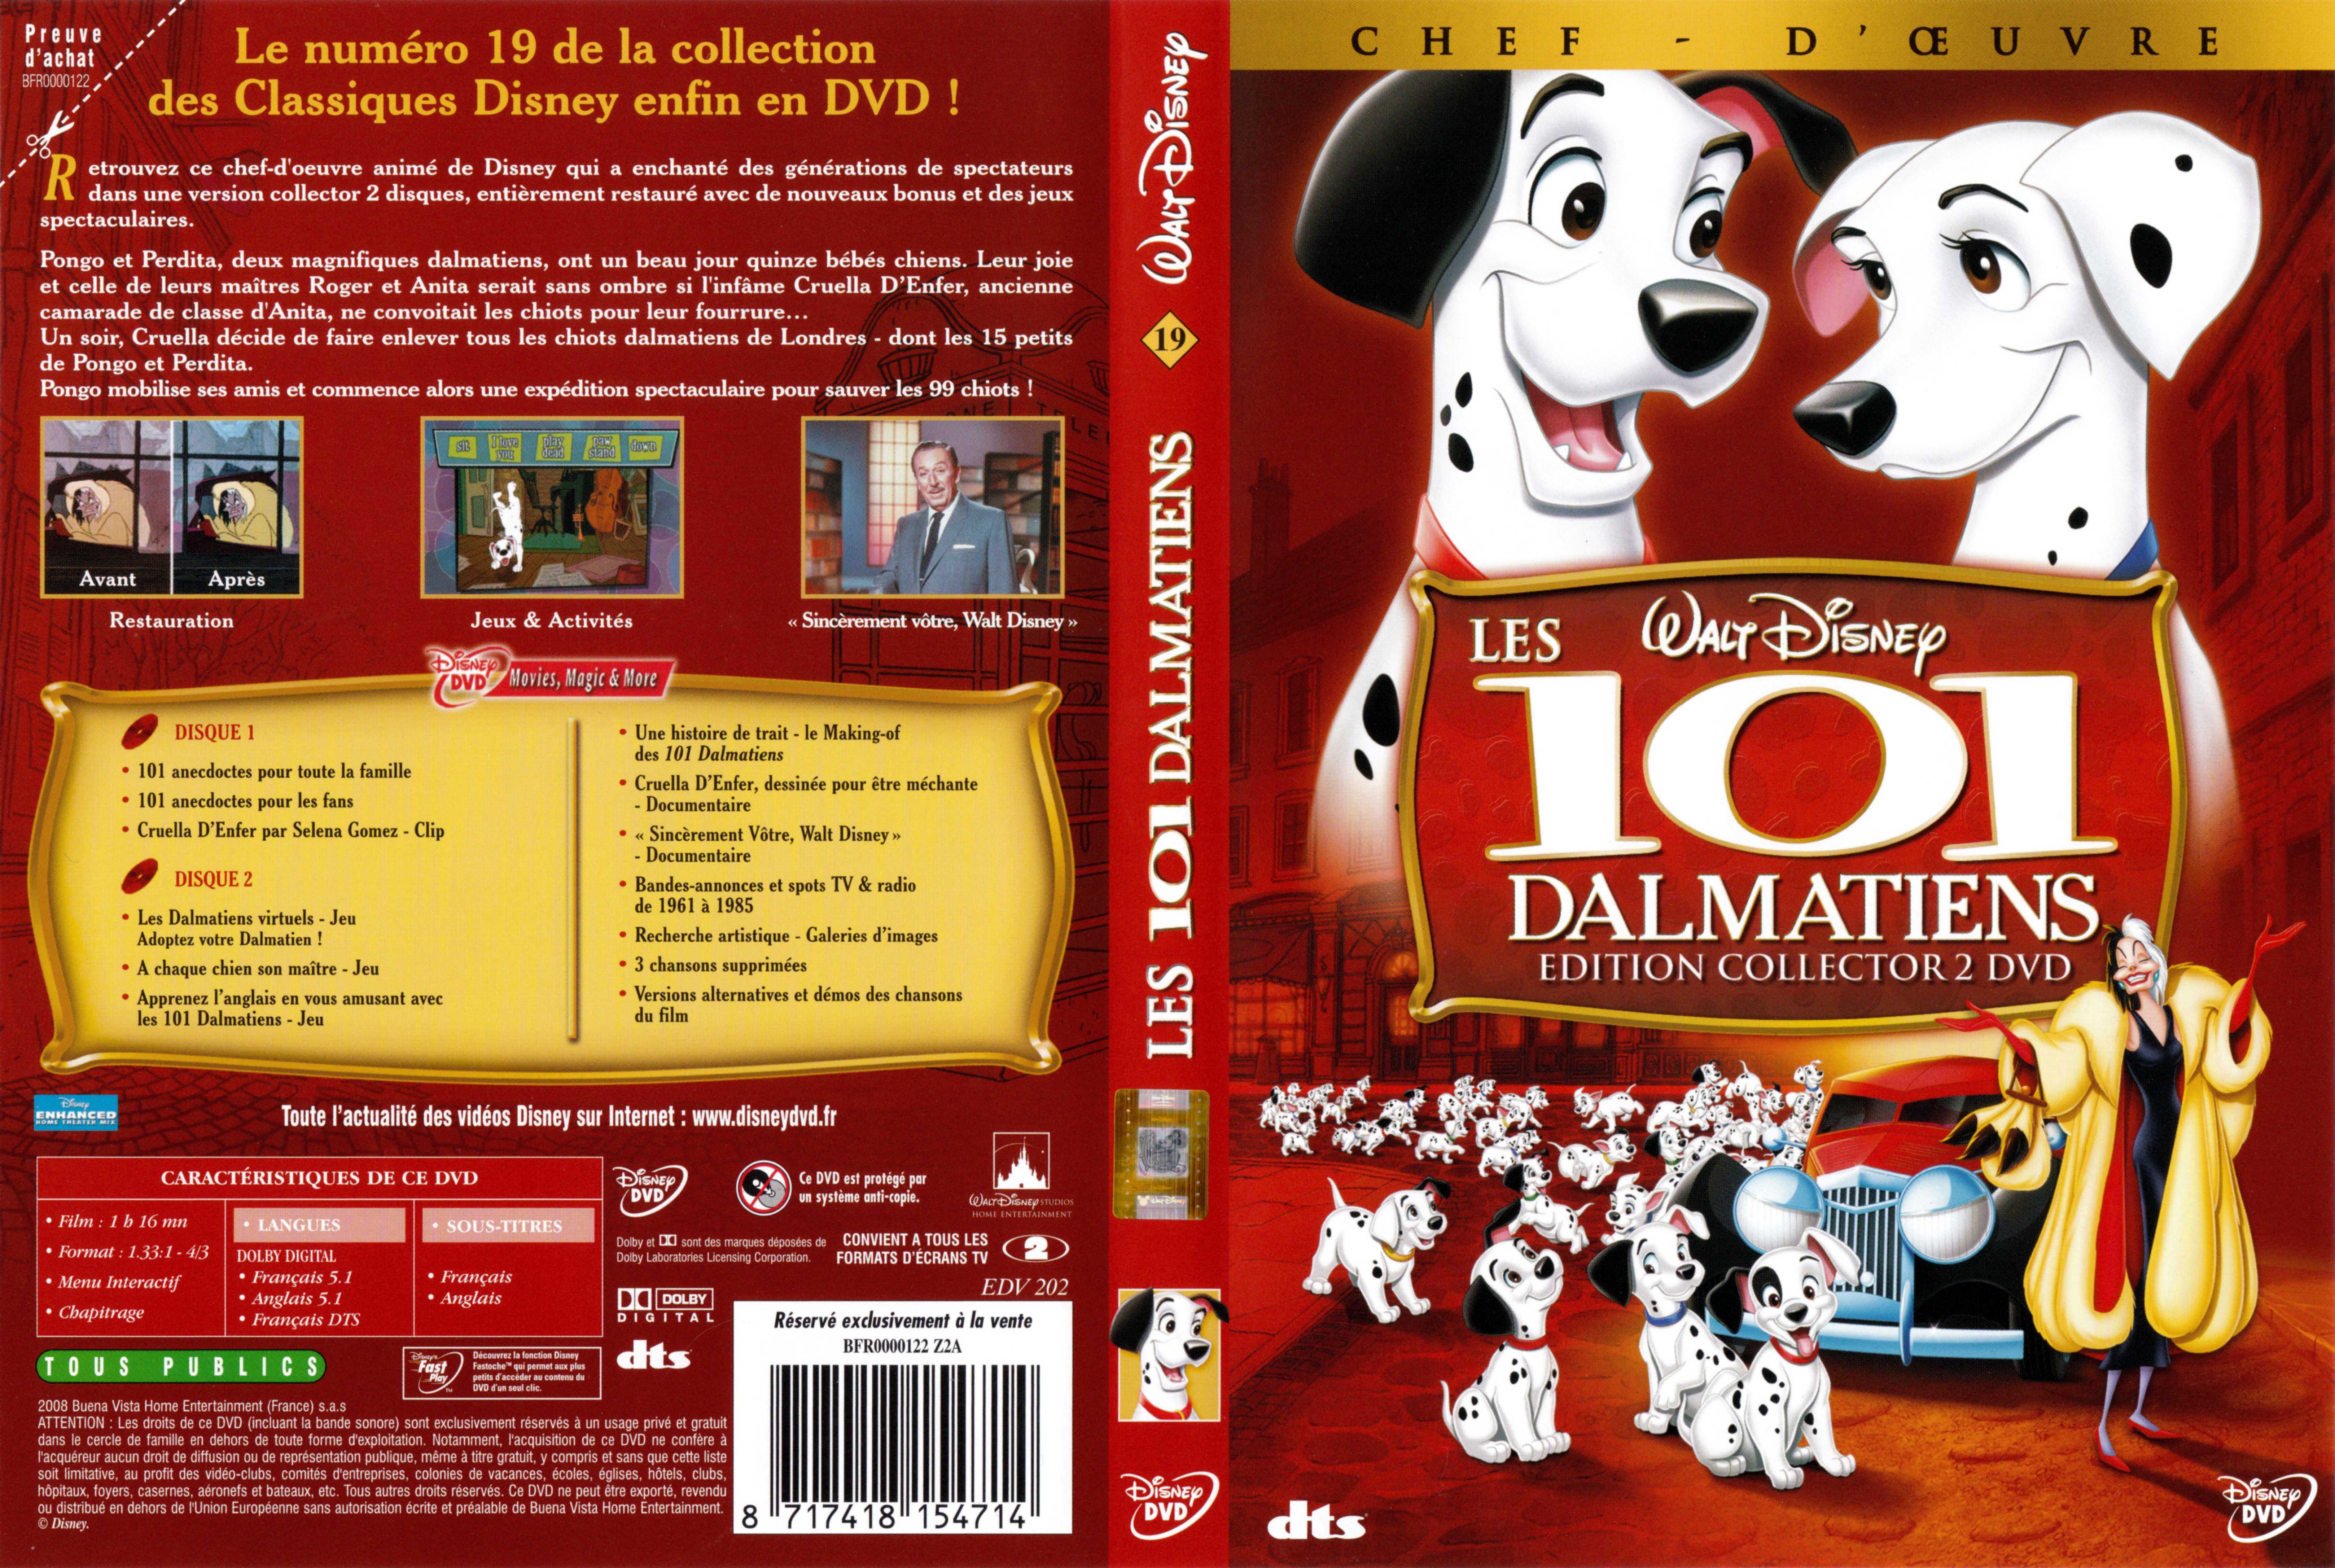 Jaquette DVD Les 101 dalmatiens v3